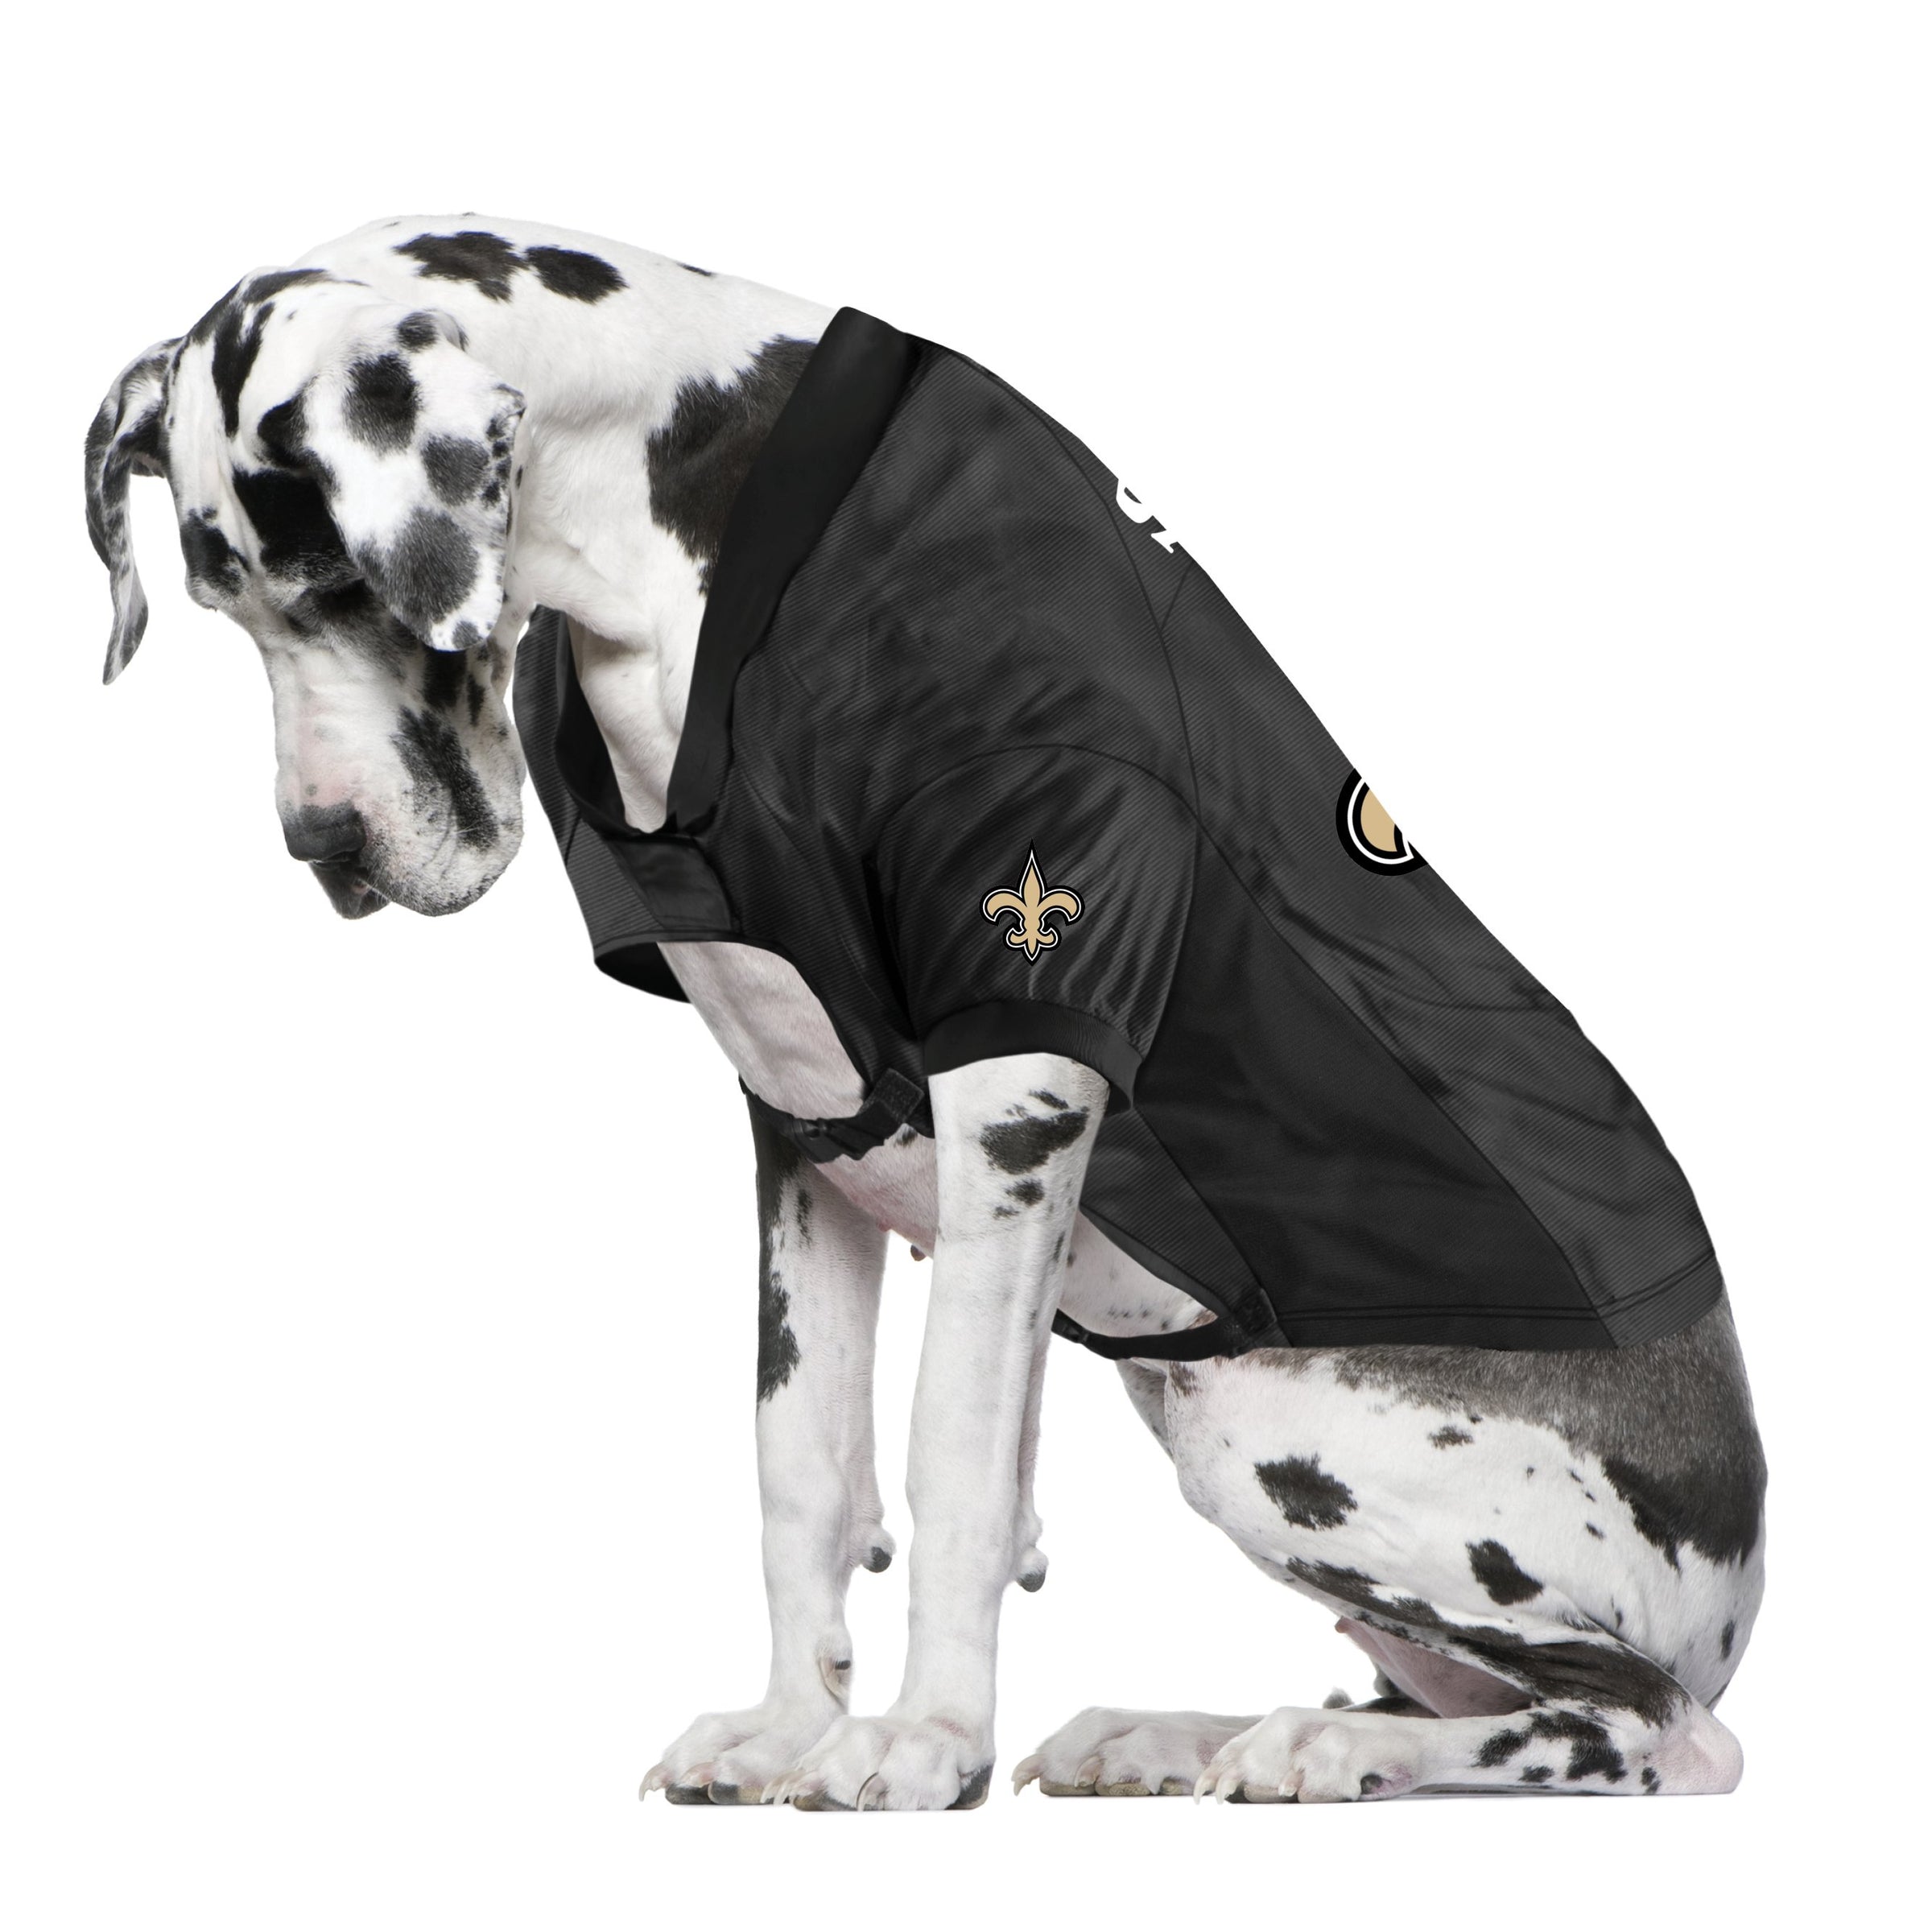  NFL New Orleans Saints Dog Jersey, Size: XX-Large